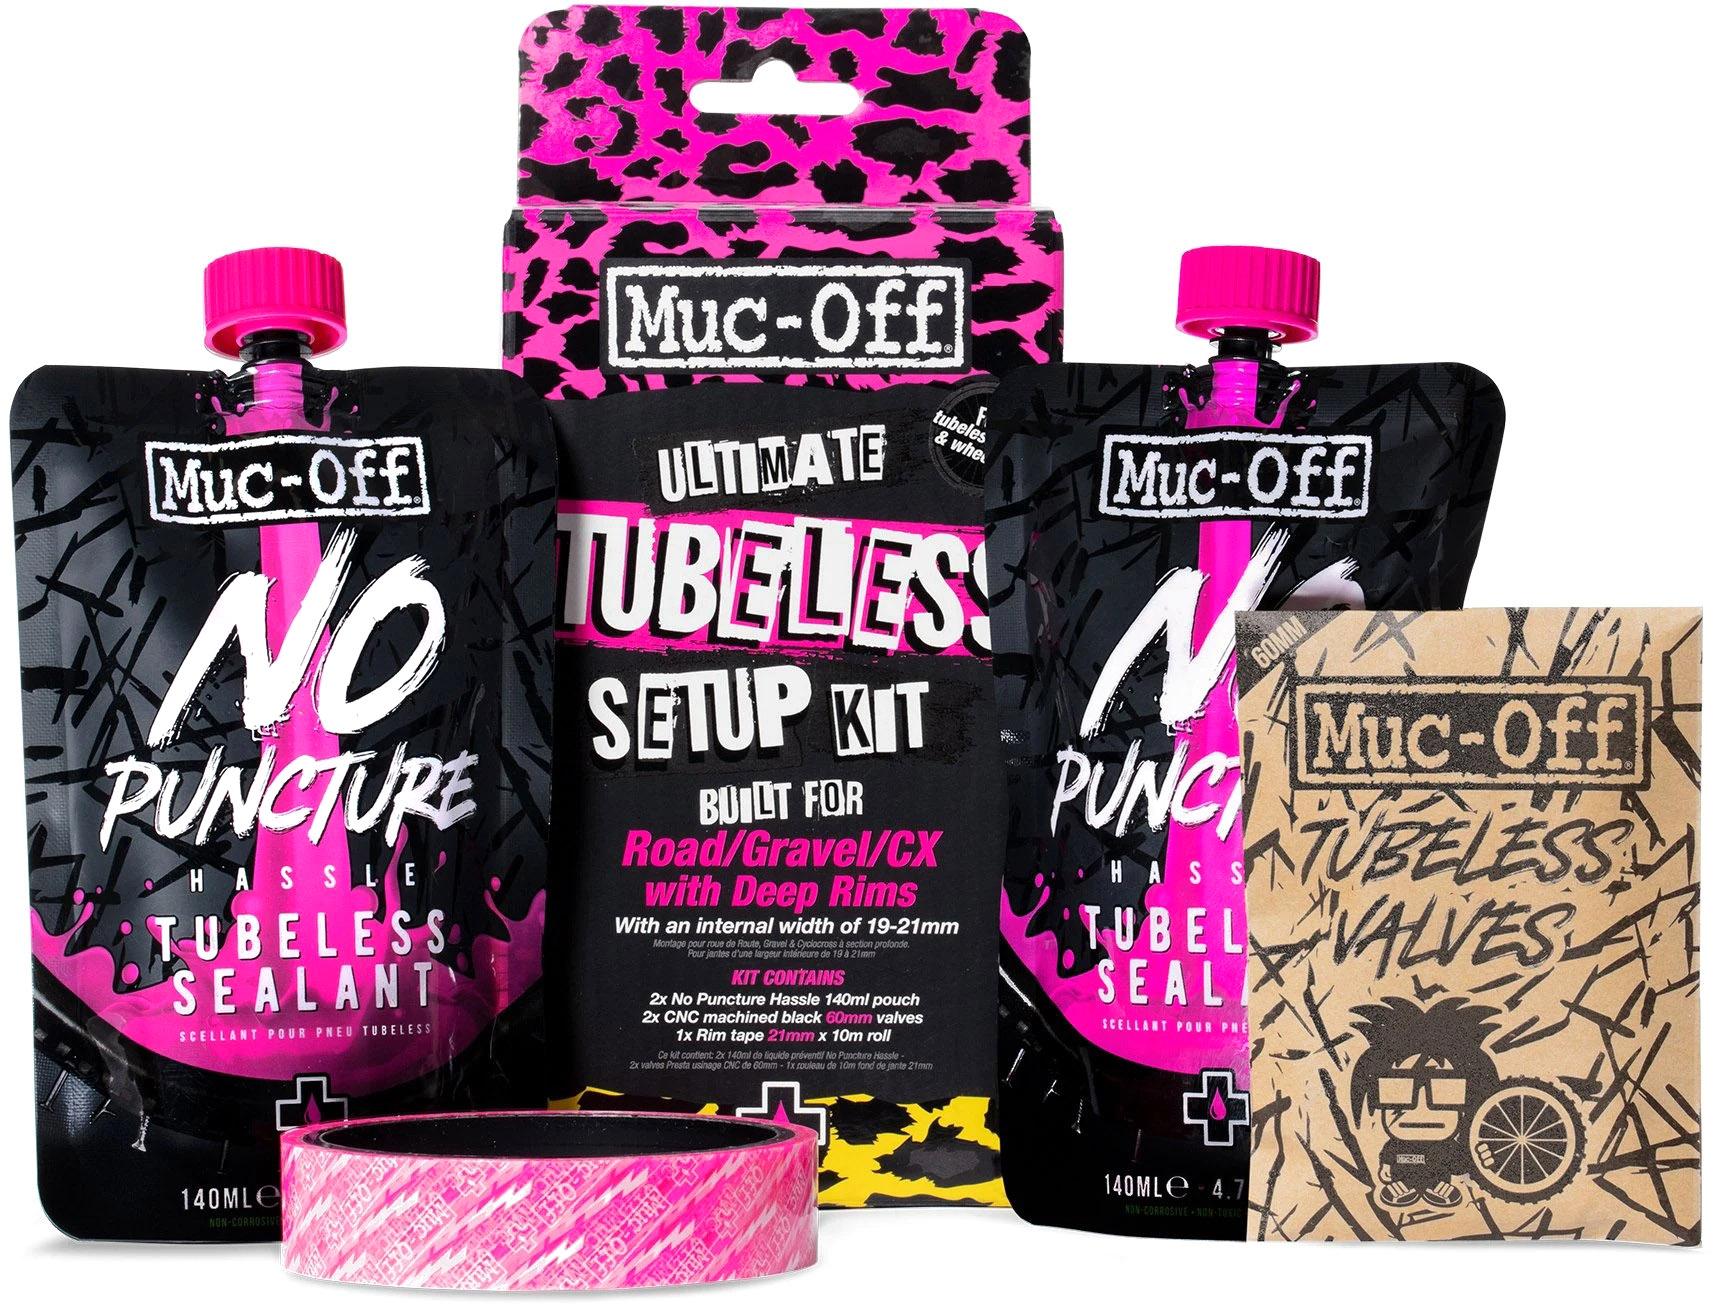 Muc-off Ultimate Tubeless Dh-plus Mtb Setup Kit  Black/pink